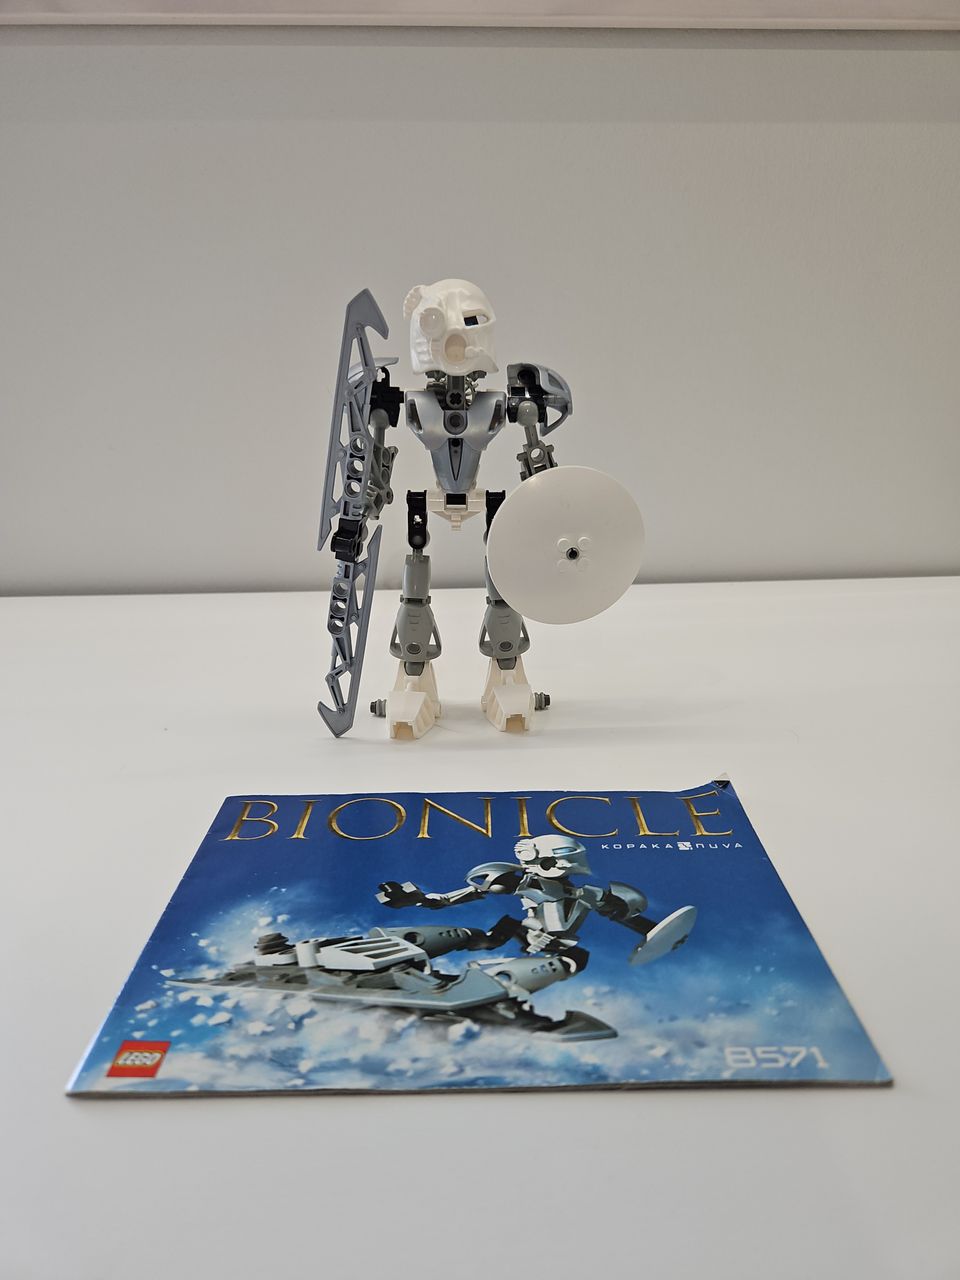 Lego Bionicle 8571: Kopaka Nuva